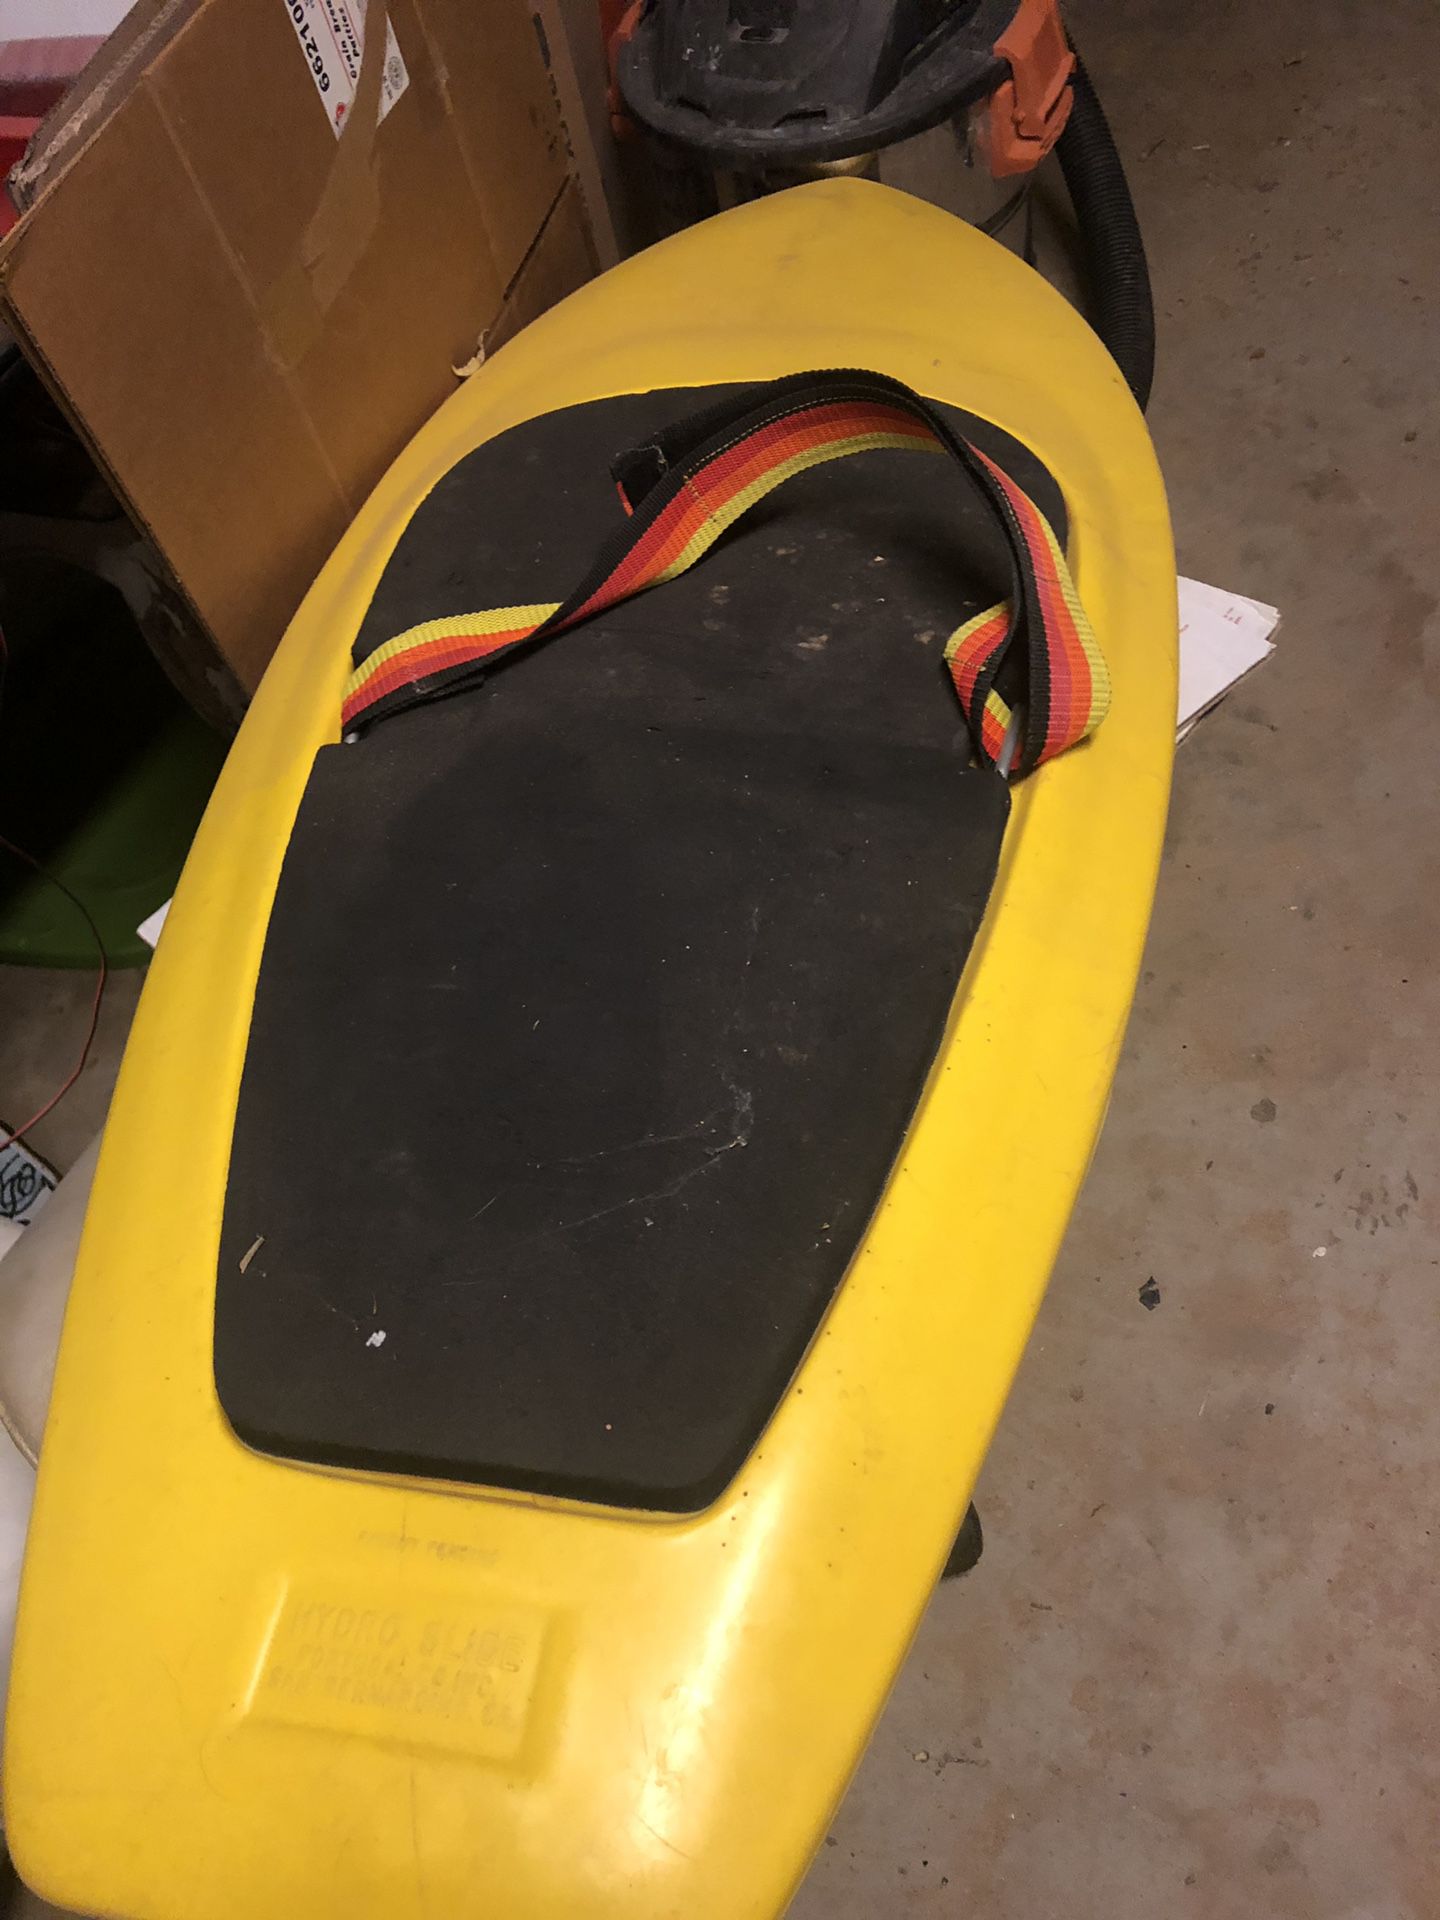 Vintage Hydro Slide kneeboard